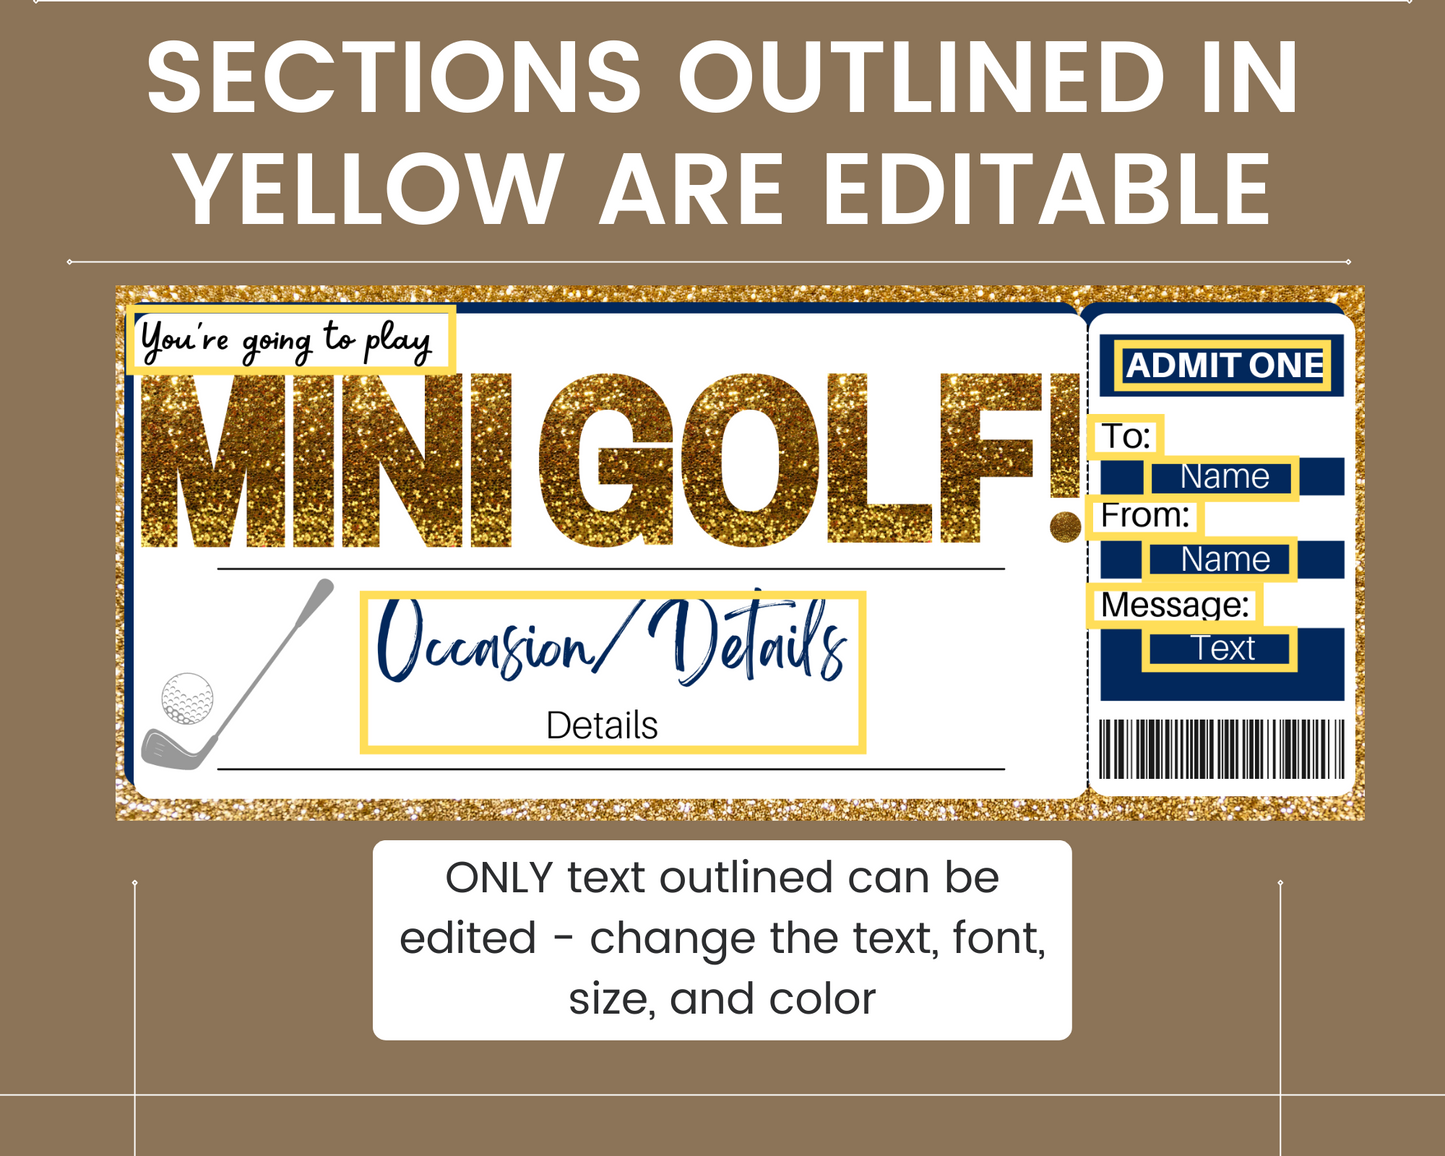 Mini Golfing Gift Ticket Template